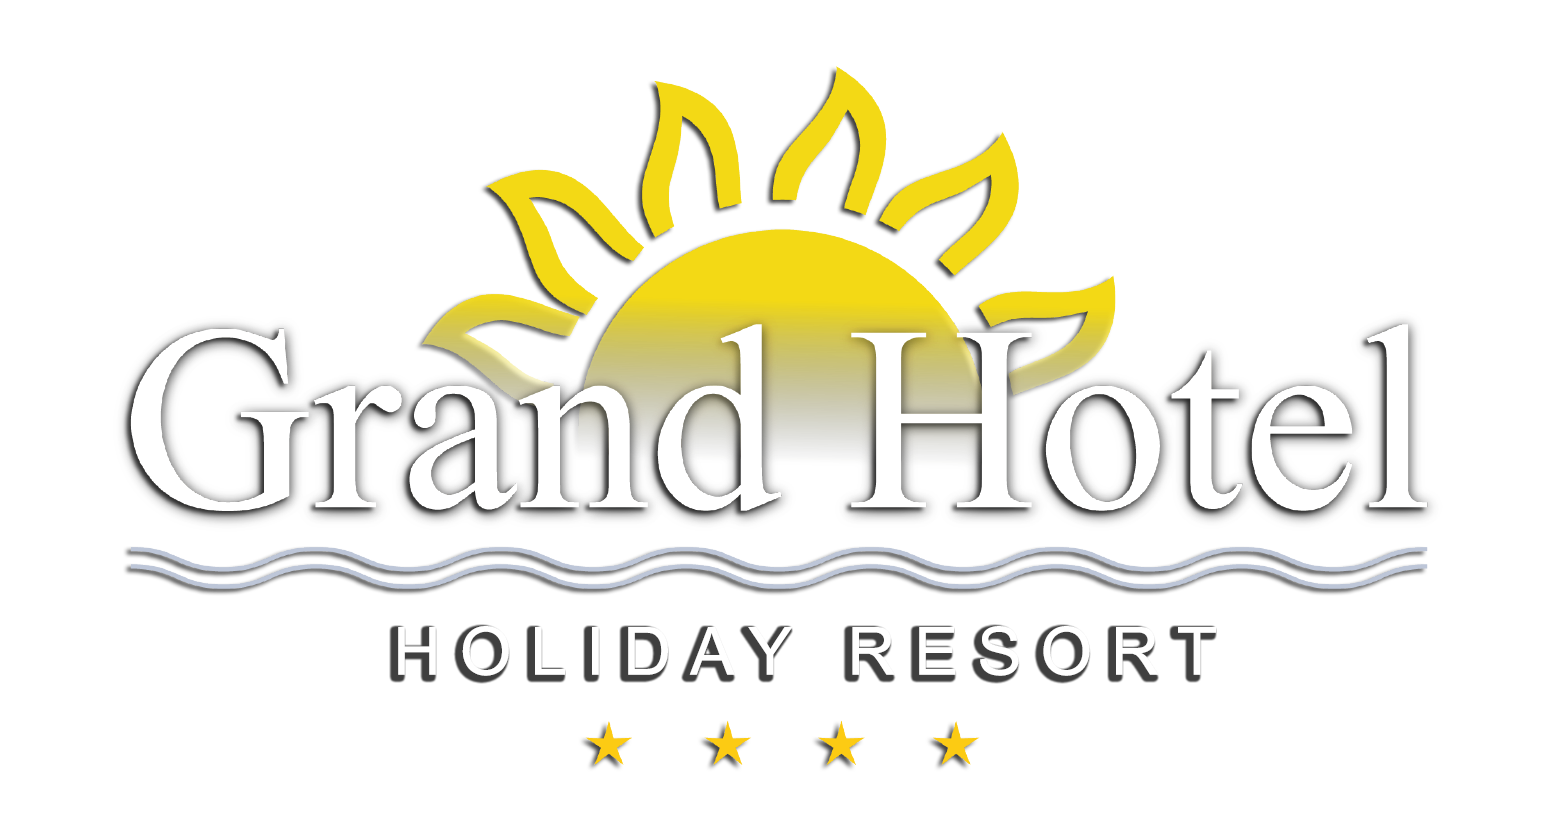 Grand Hotel Holiday Resort Logo